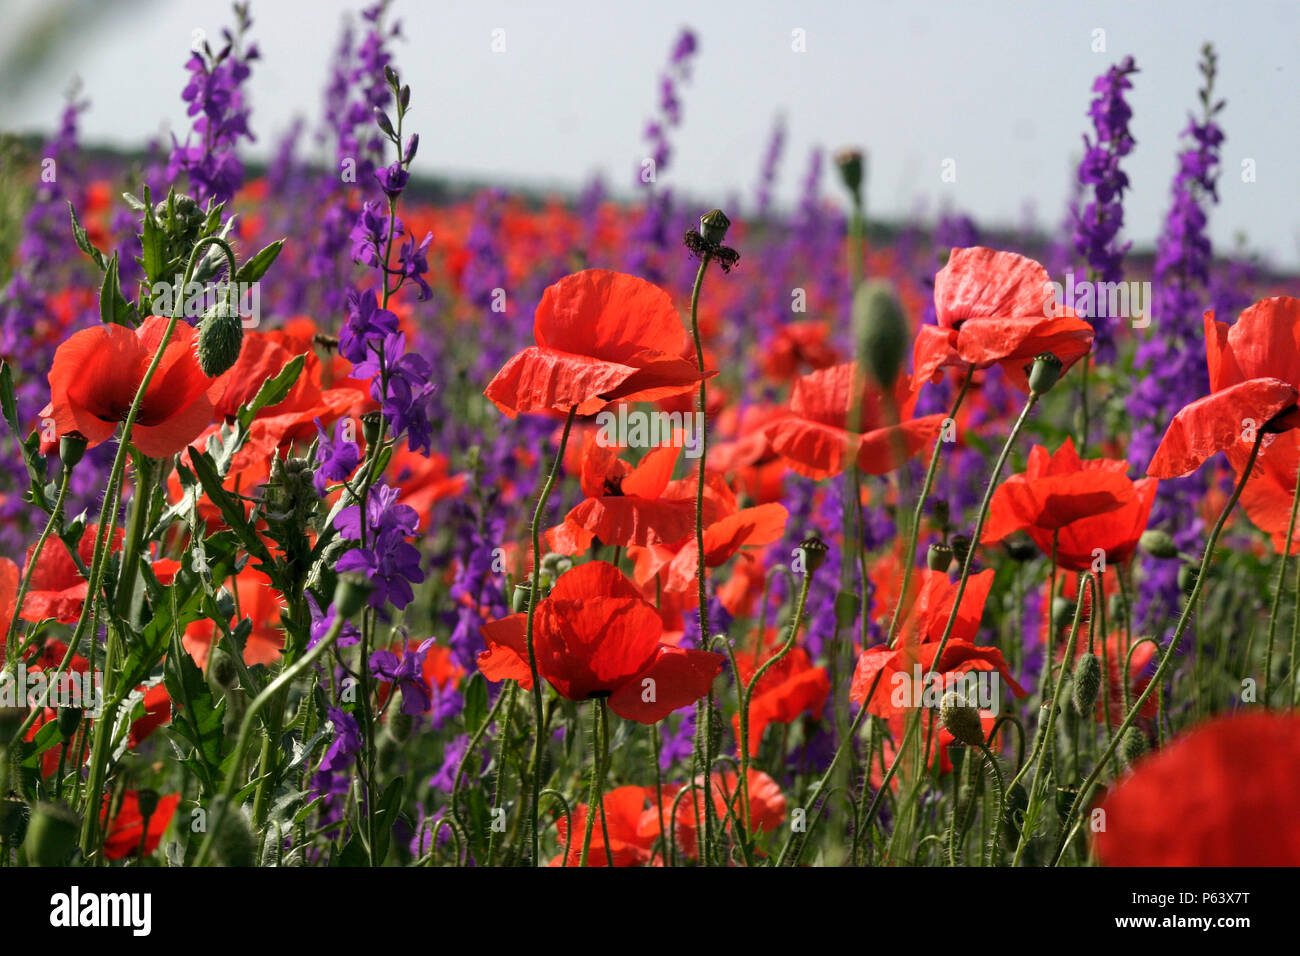 Amazing field of poppies and delphinium flowers Stock Photo